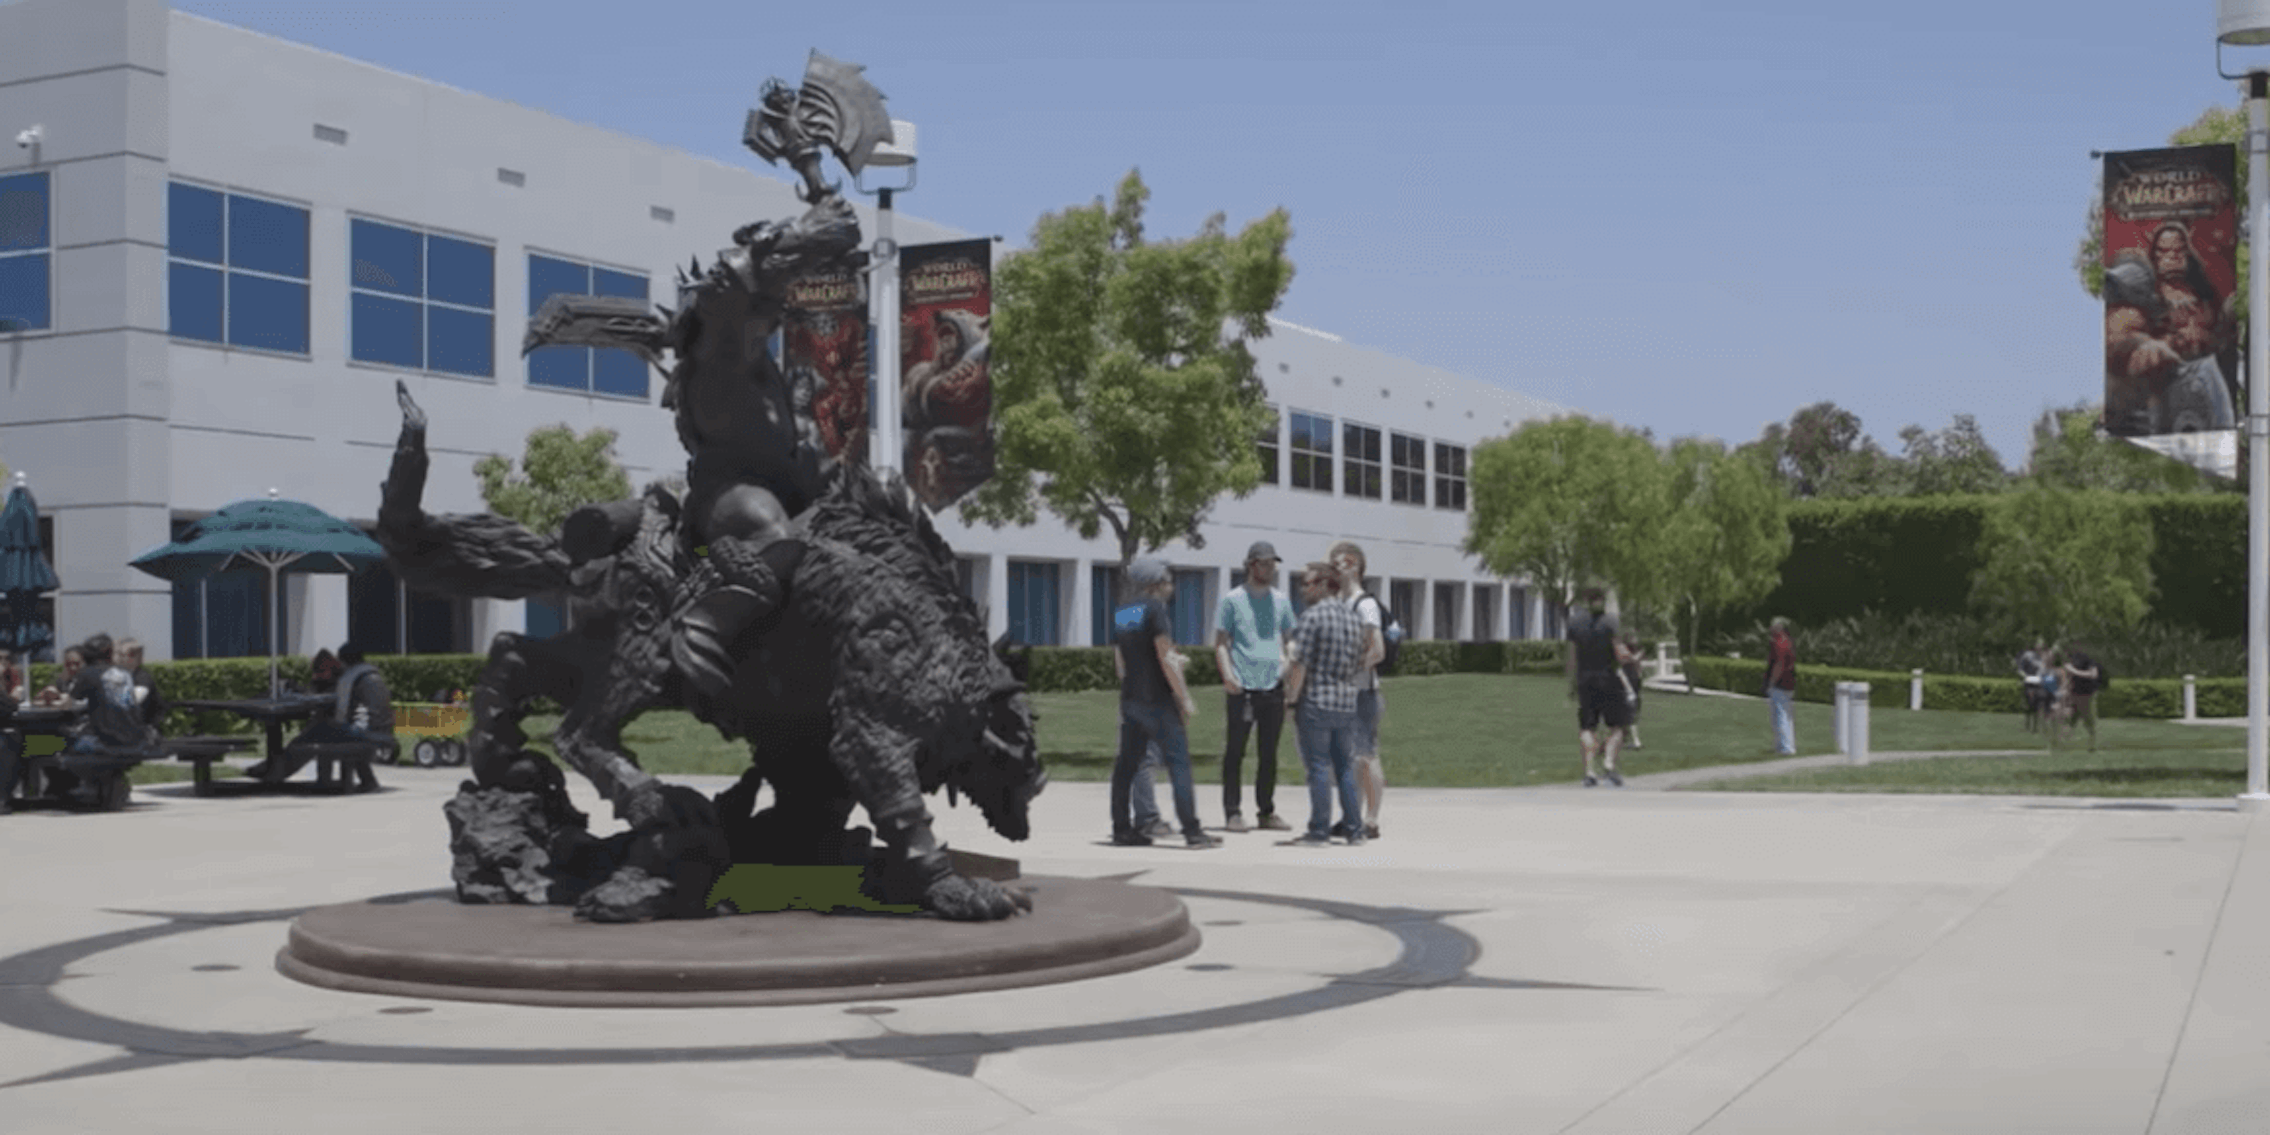 Blizzard's Account Deletion Mechanism Conveniently Breaks Down